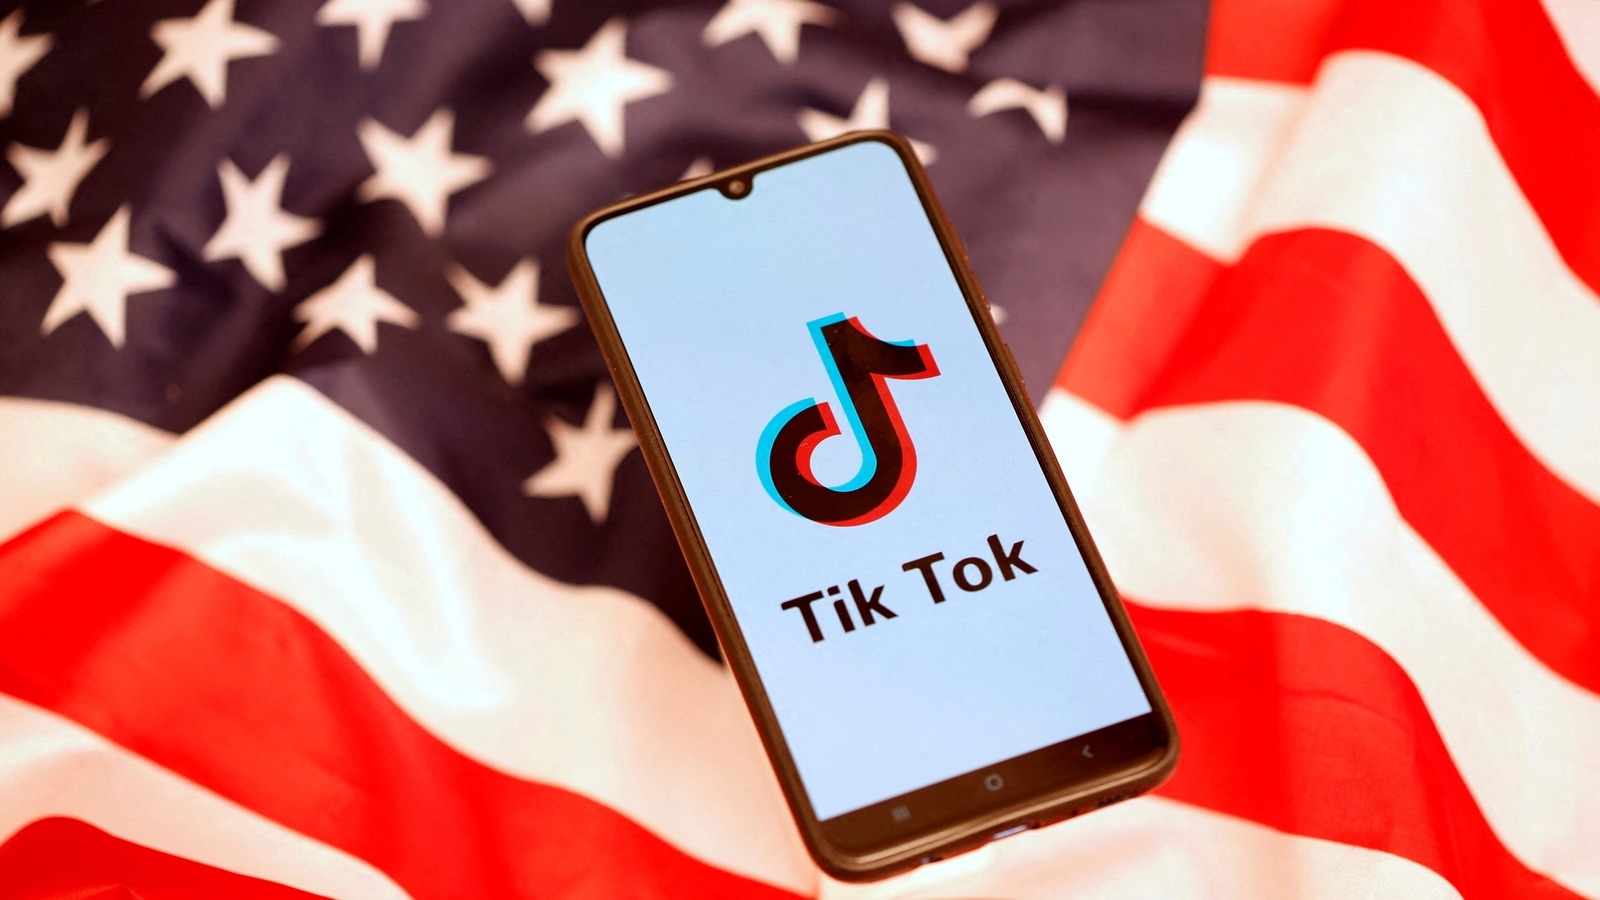 Mike Pence Pushes Ban on TikTok, Calling It a Communist Platform